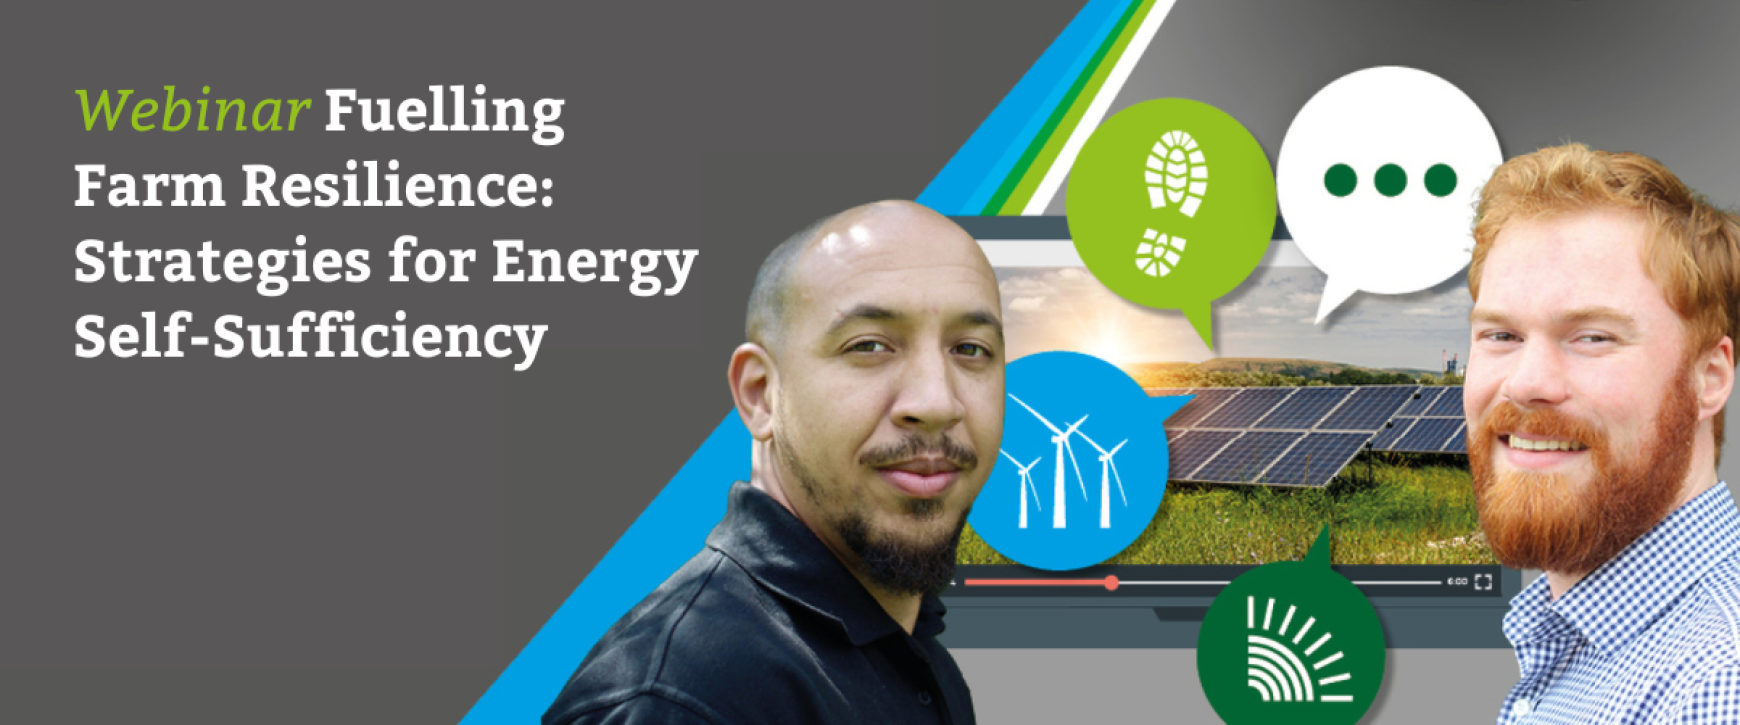 Recap of NFU Energy's Webinar on Farm Resilience through Energy Self-Sufficiency